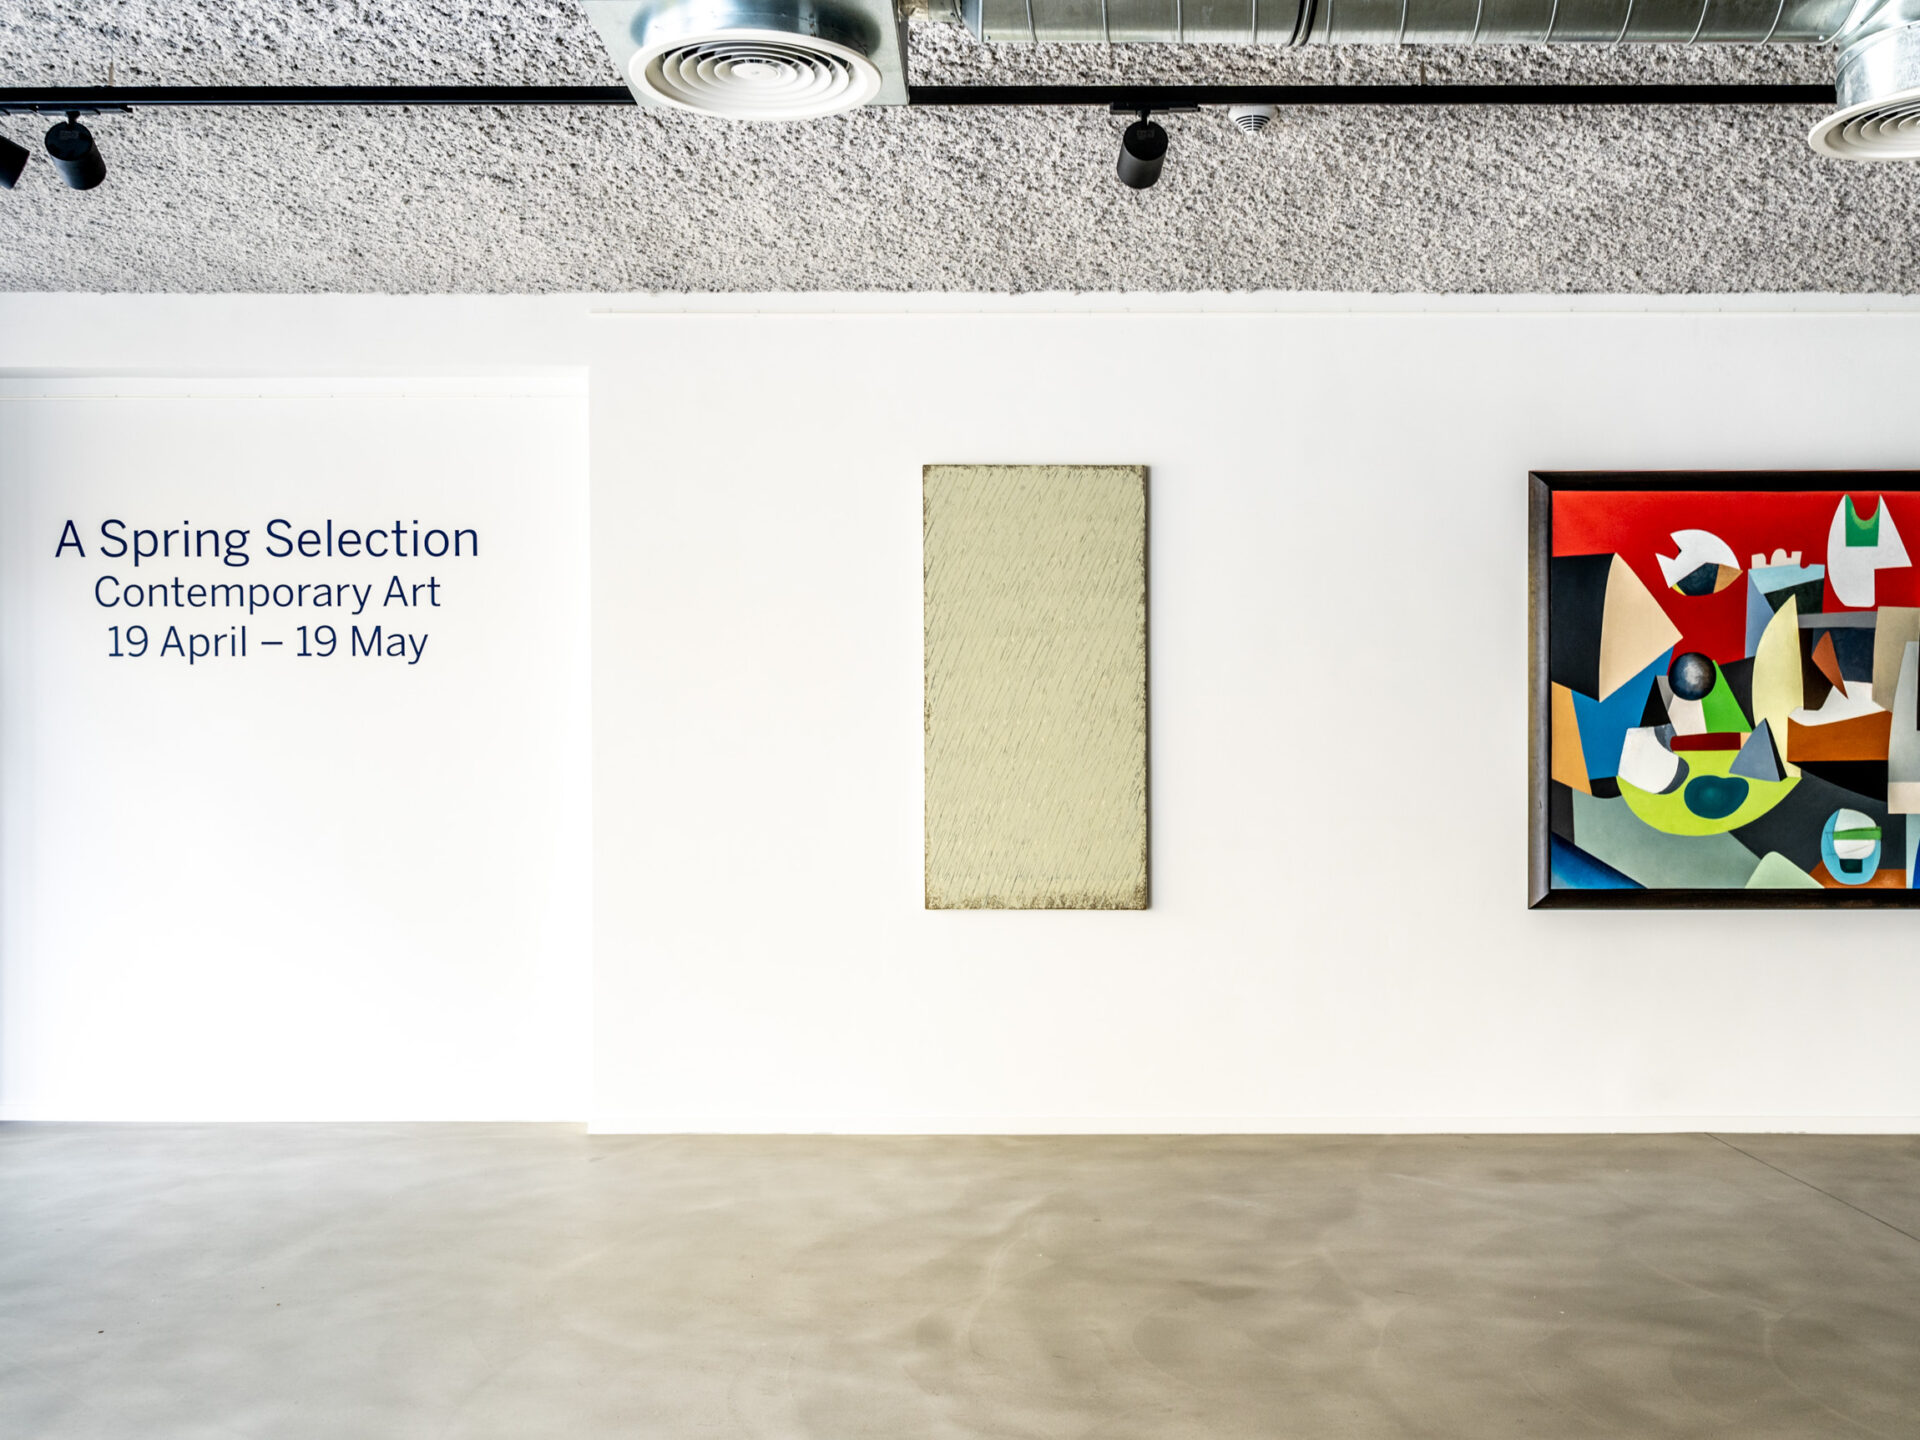 Belgium Sothebys Int. Realty A Spring Selection FR